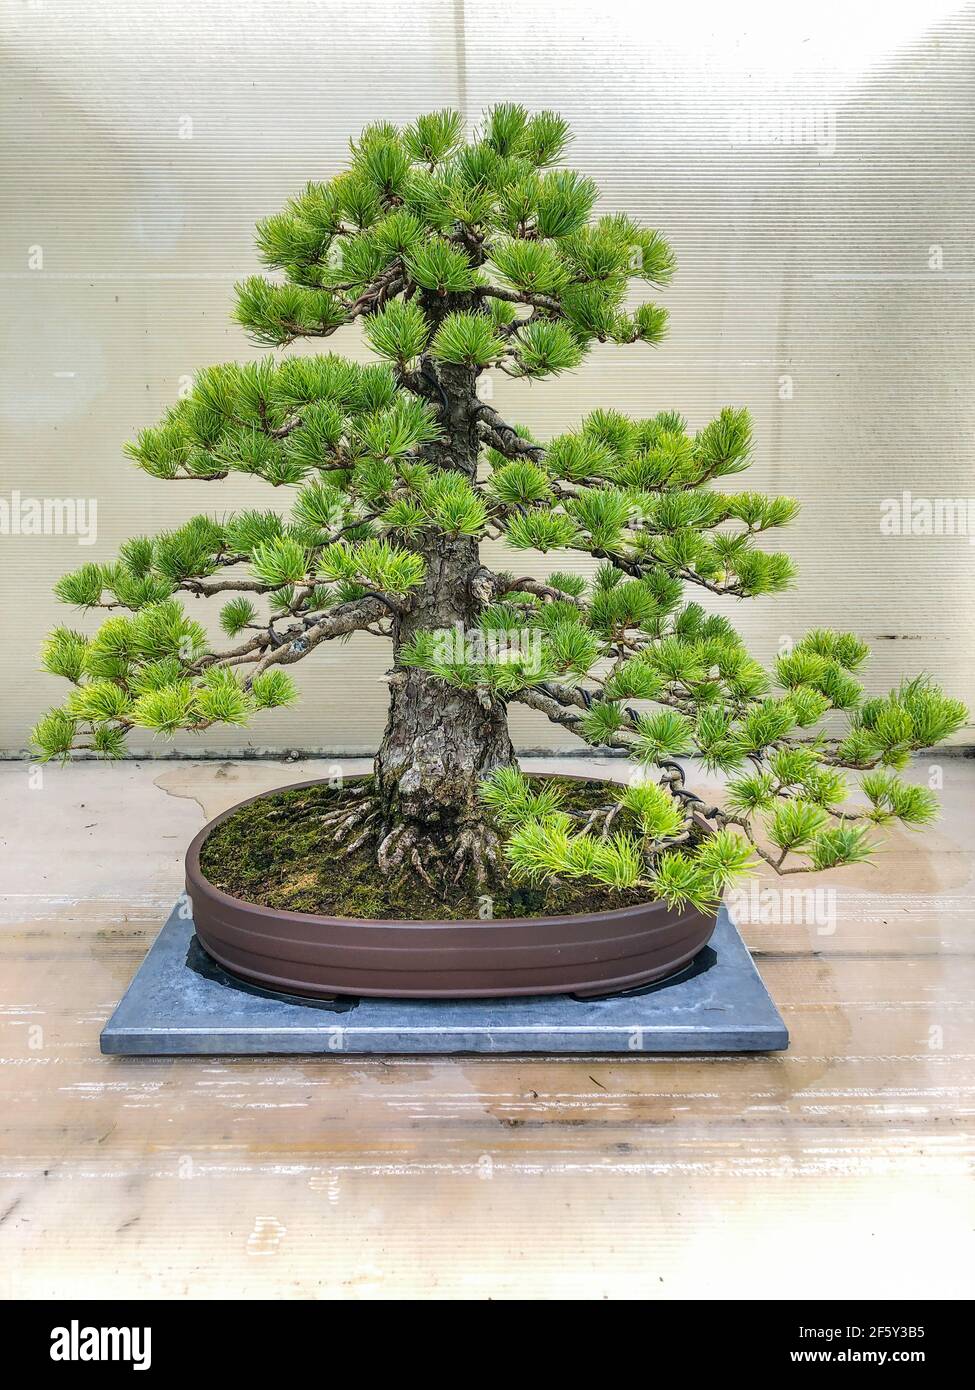 Japanese white pine (Pinus parviflora) is a pine in the white pine group, Pinus subgenus Strobus, native to Korea and Japan. Stock Photo